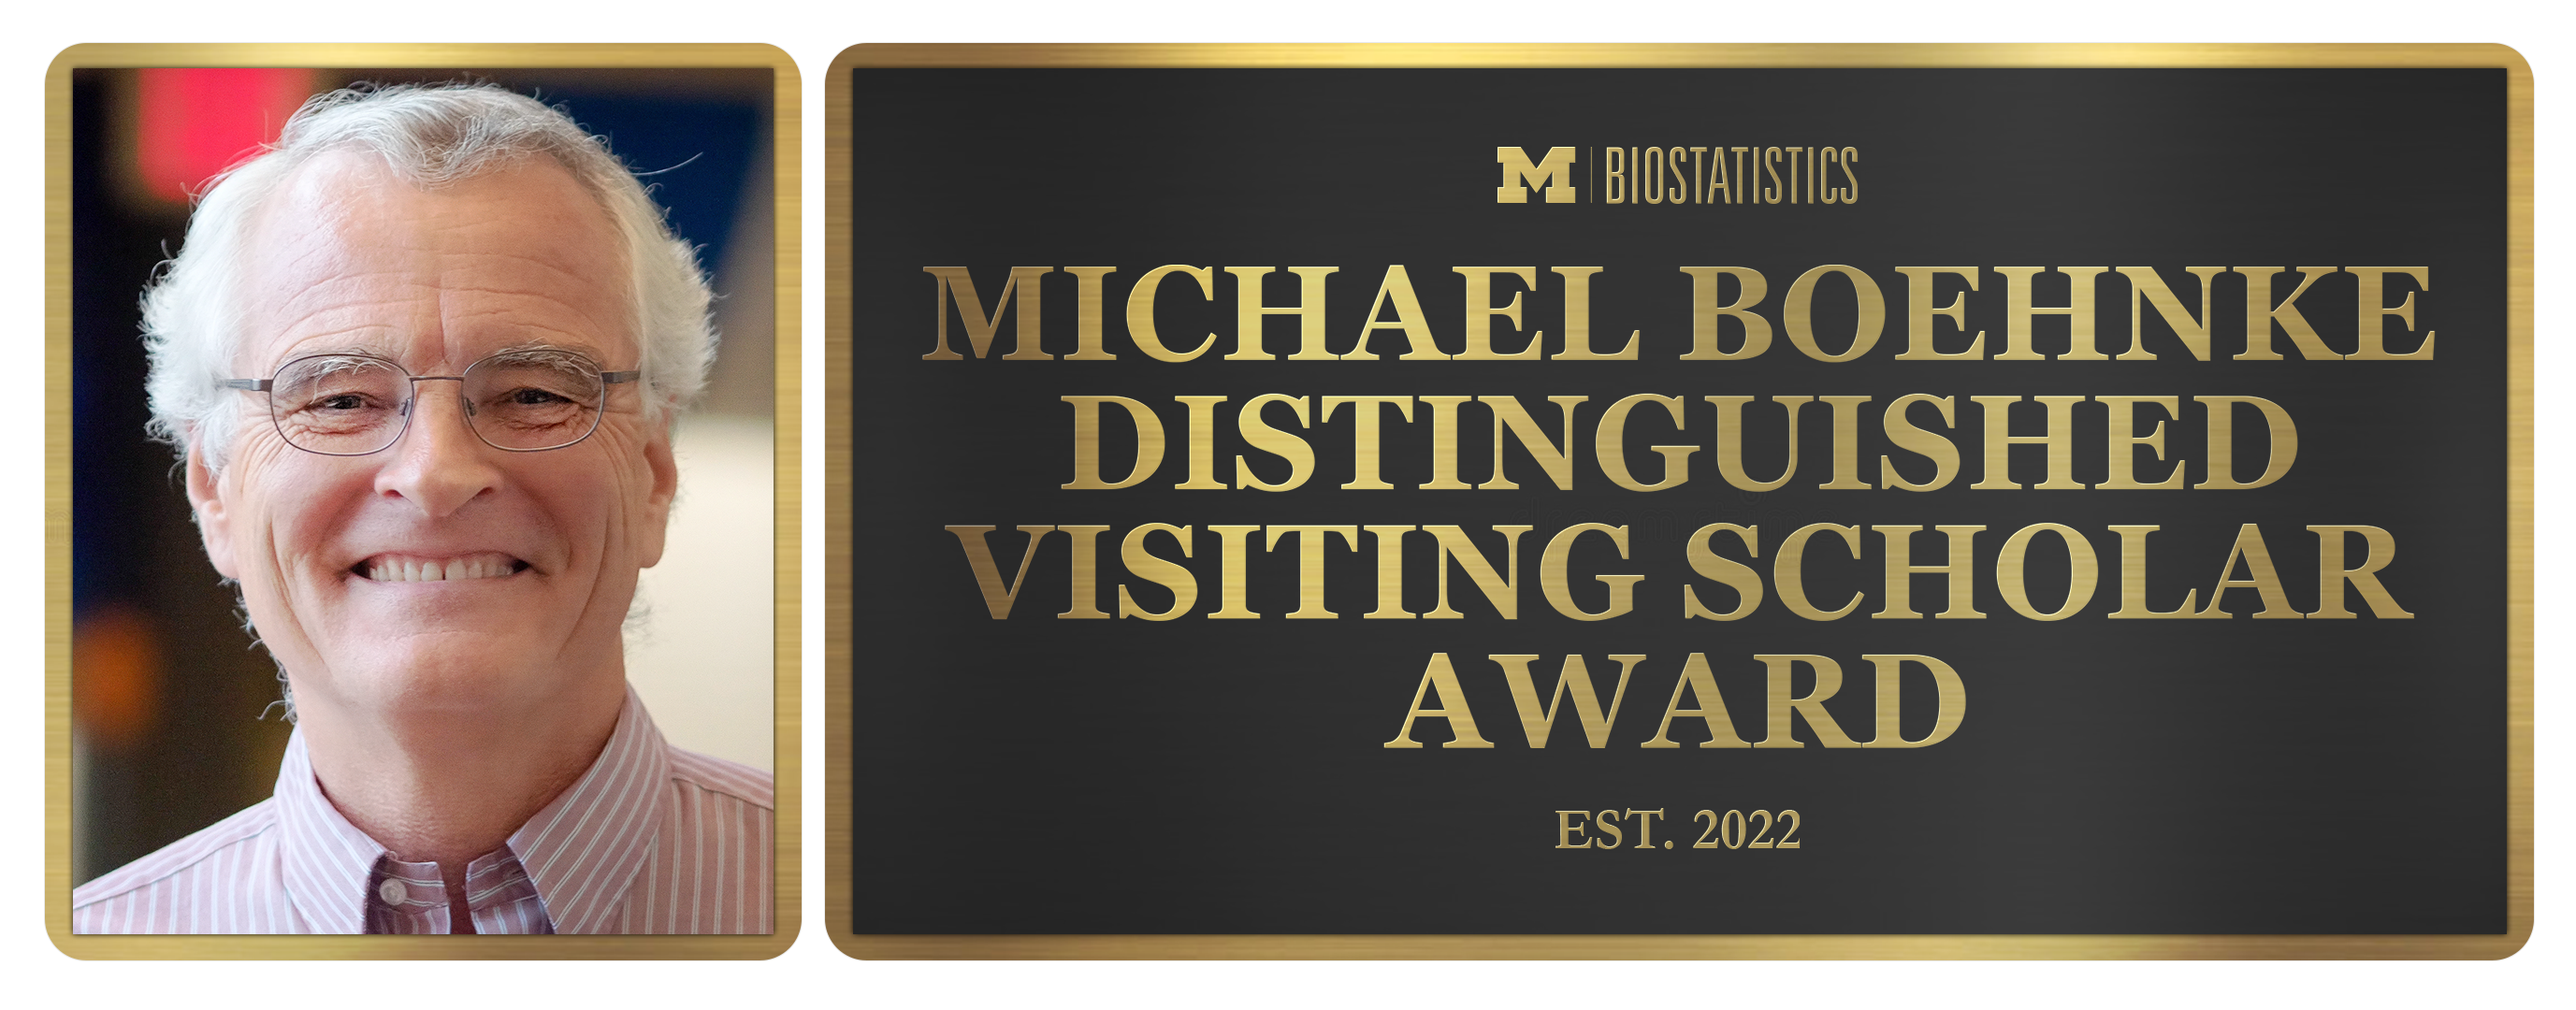 Michael Boehnke Distinguished Visiting Scholar Award